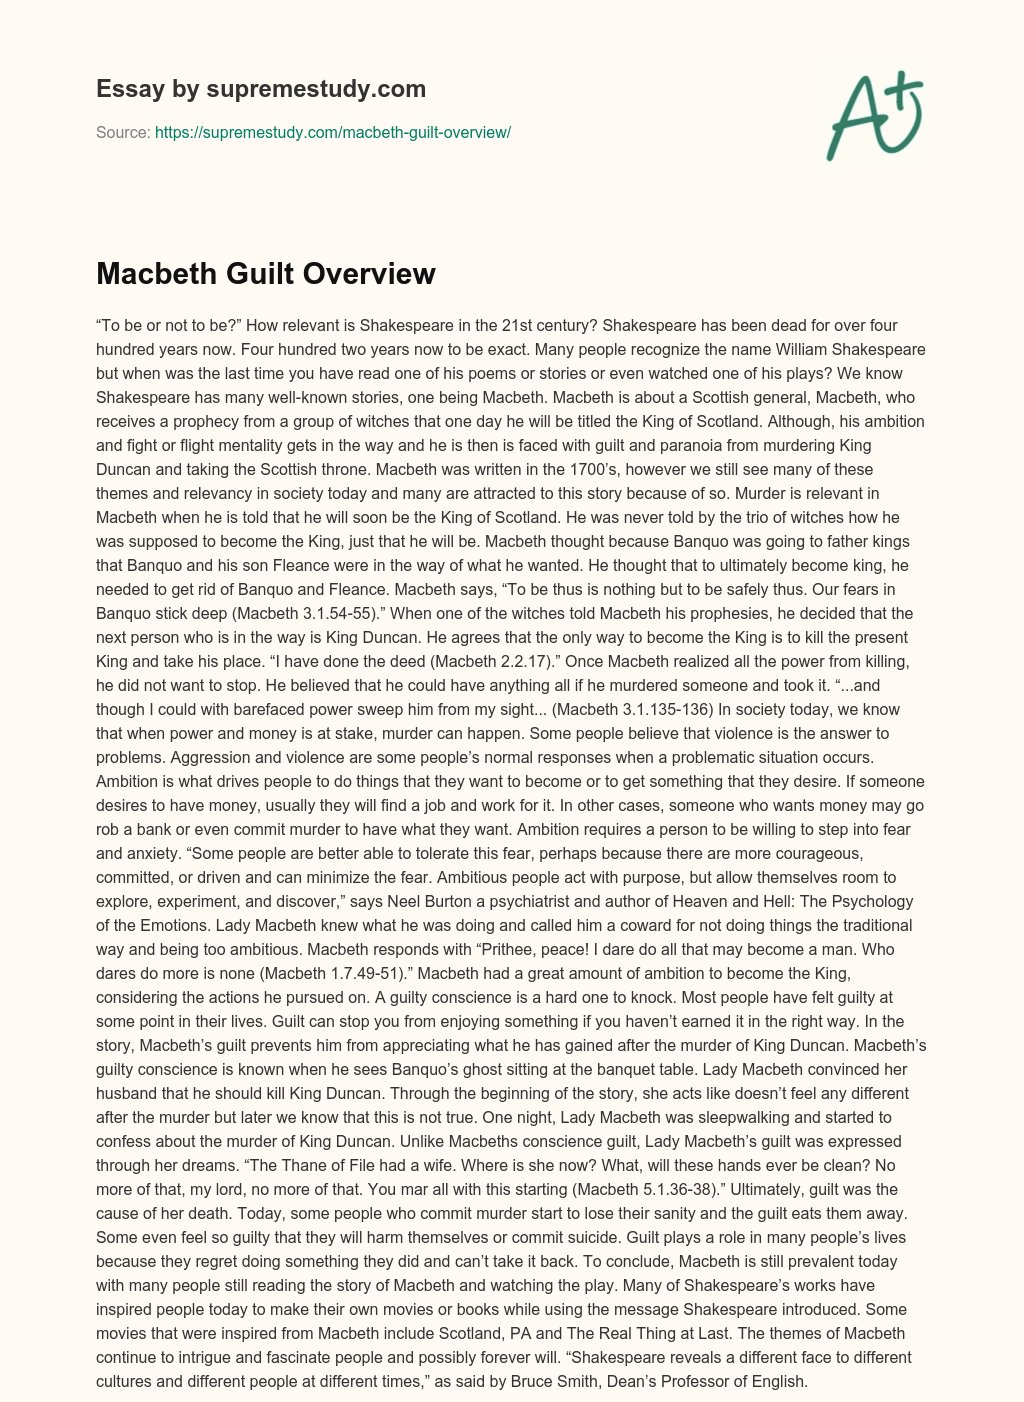 macbeth guilt theme essay